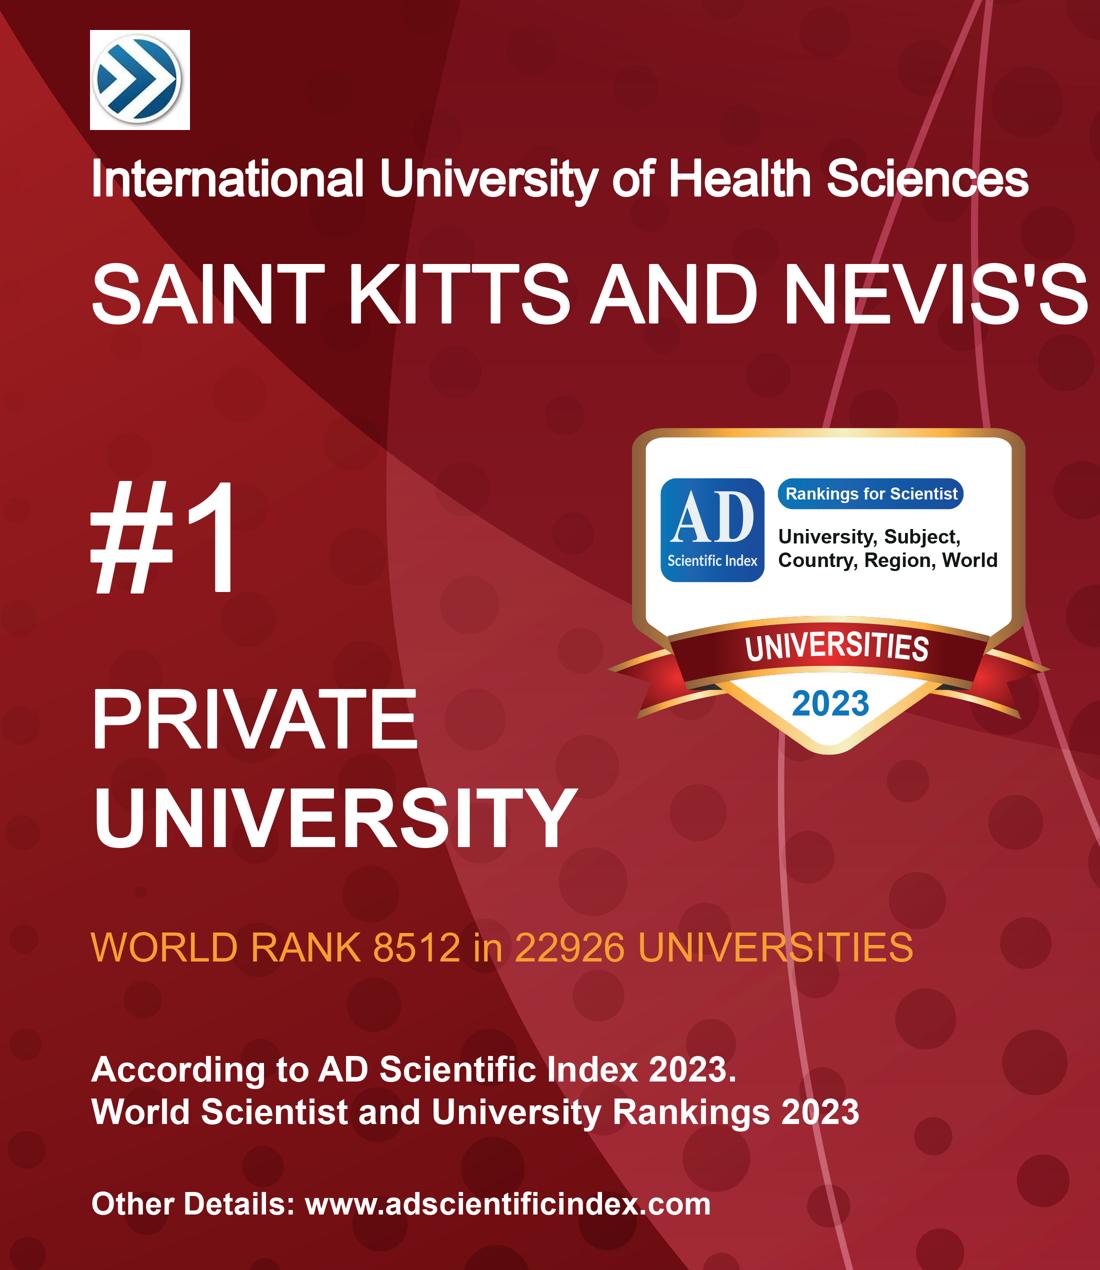 International University of Health Sciences